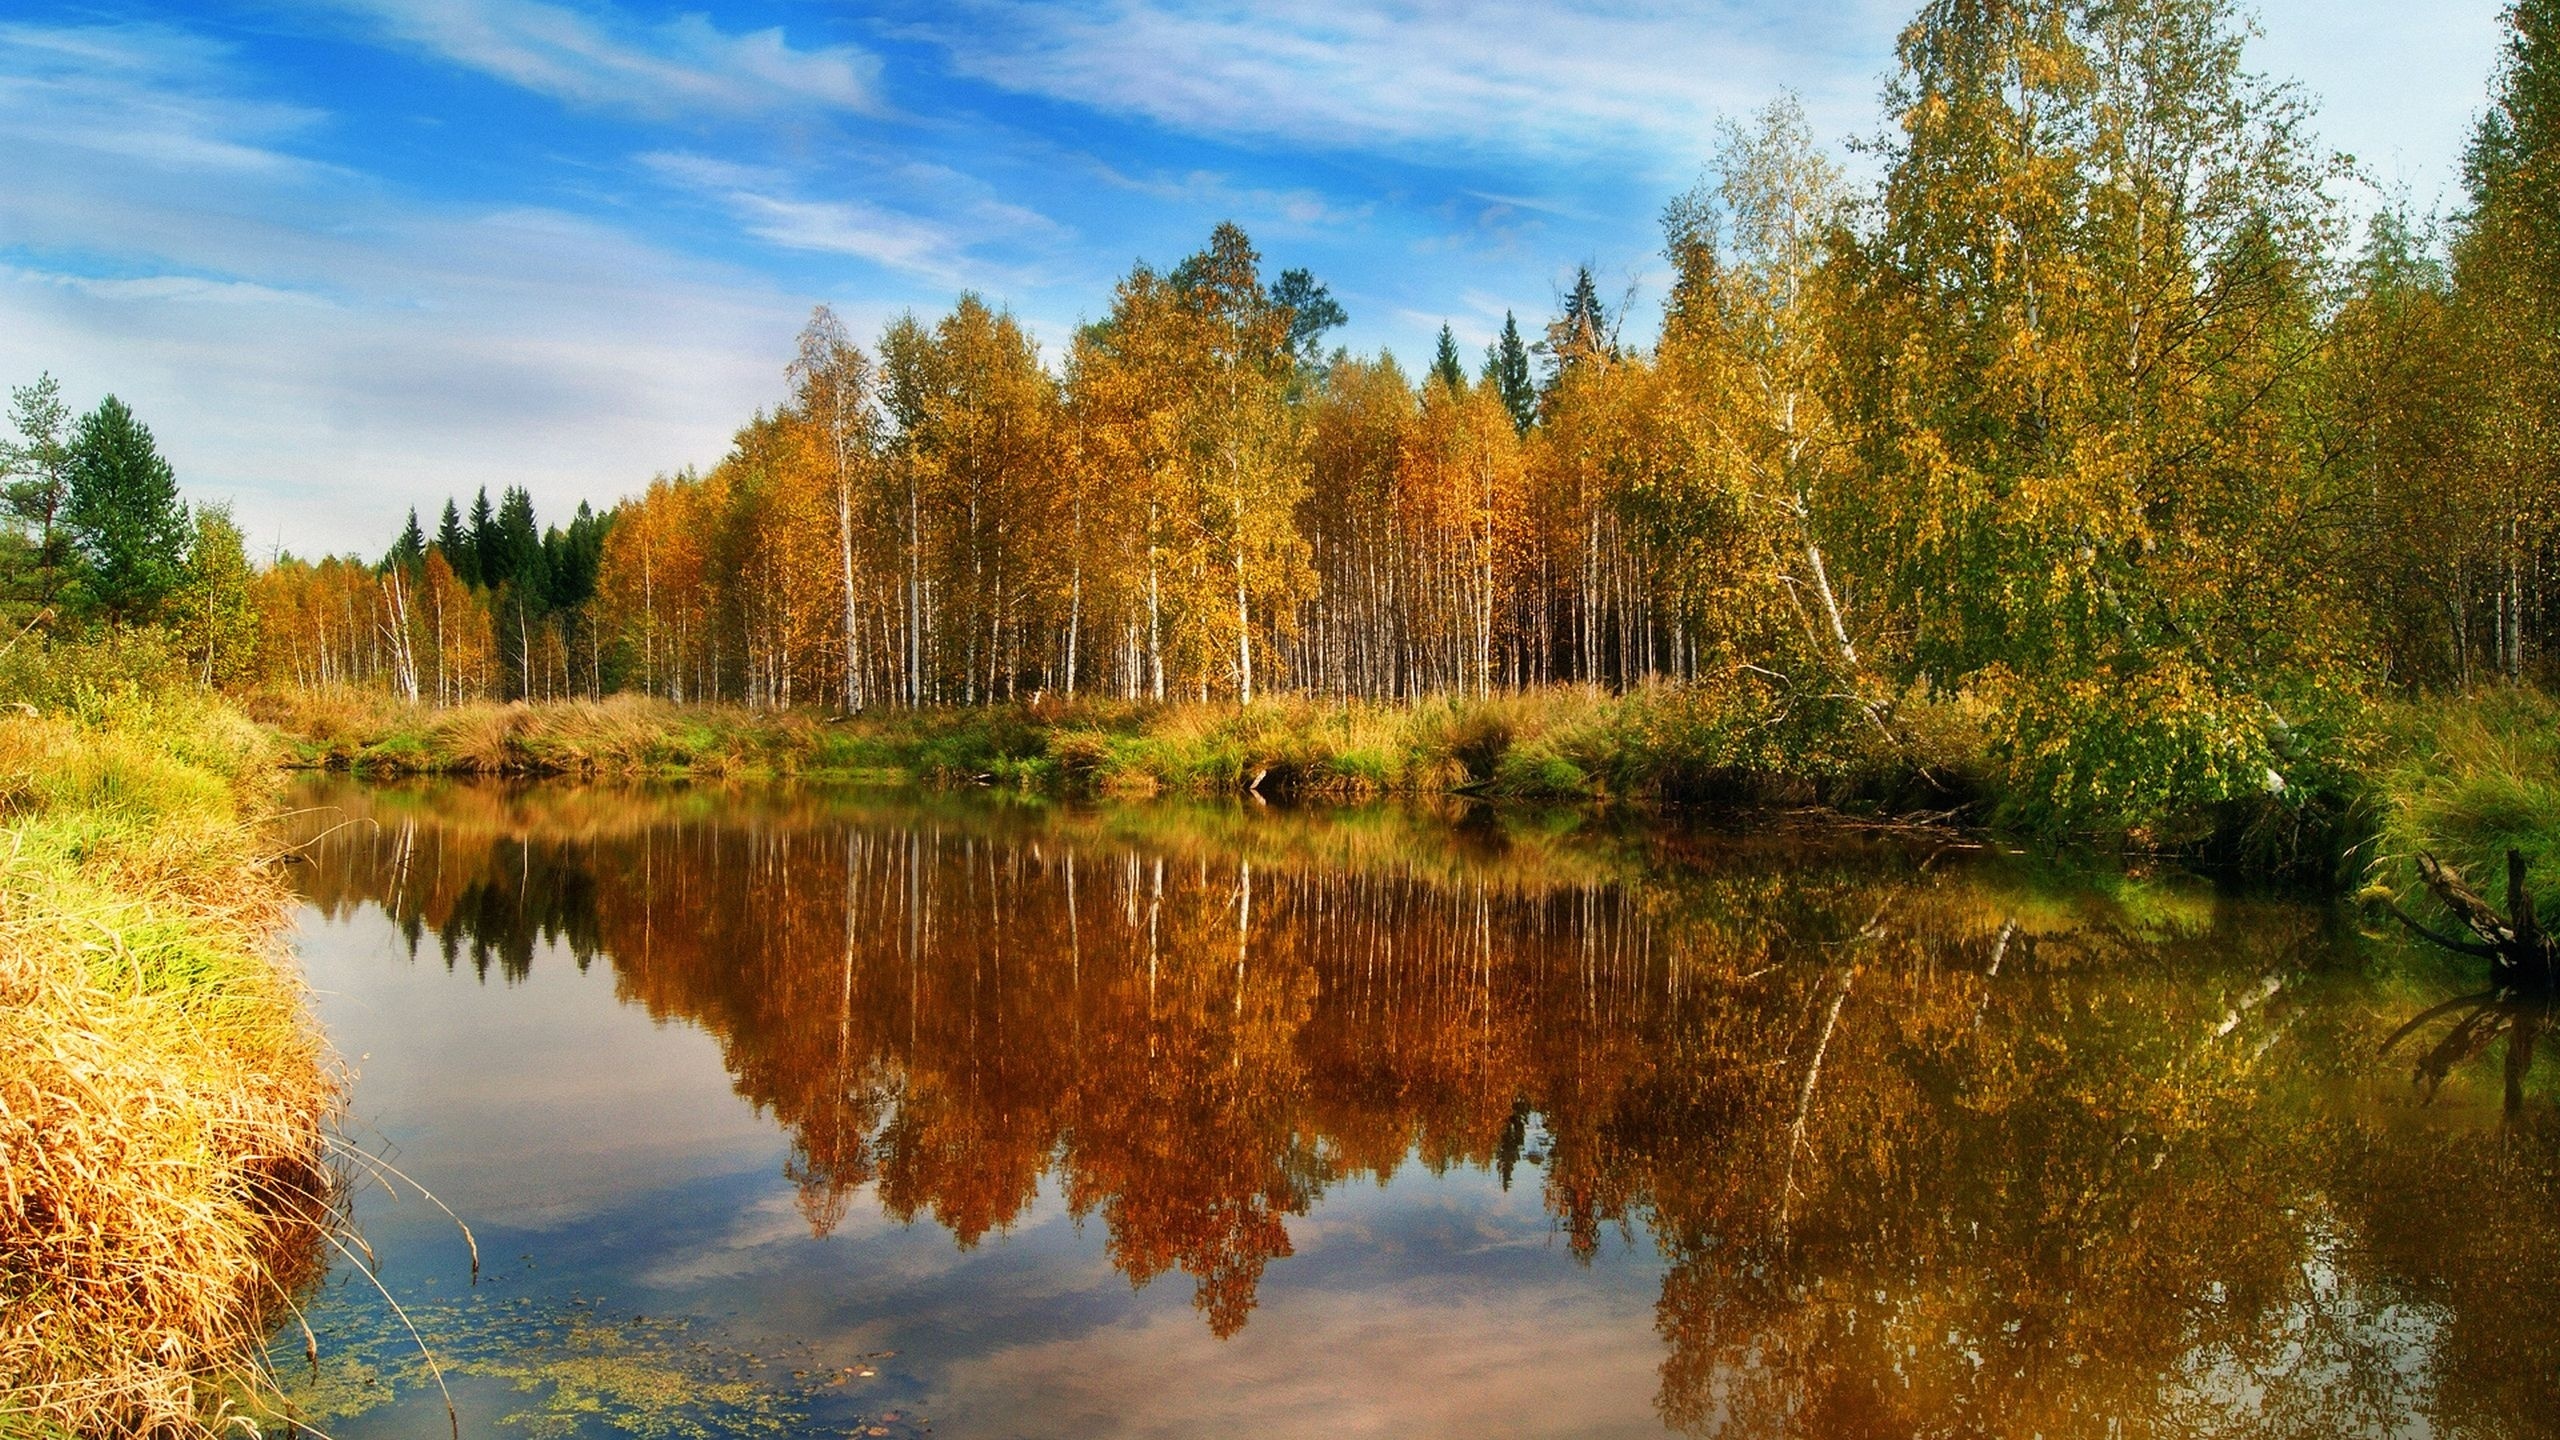 Картинки осени на рабочий. Природа. Осень. Природа осень. Золотая осень.